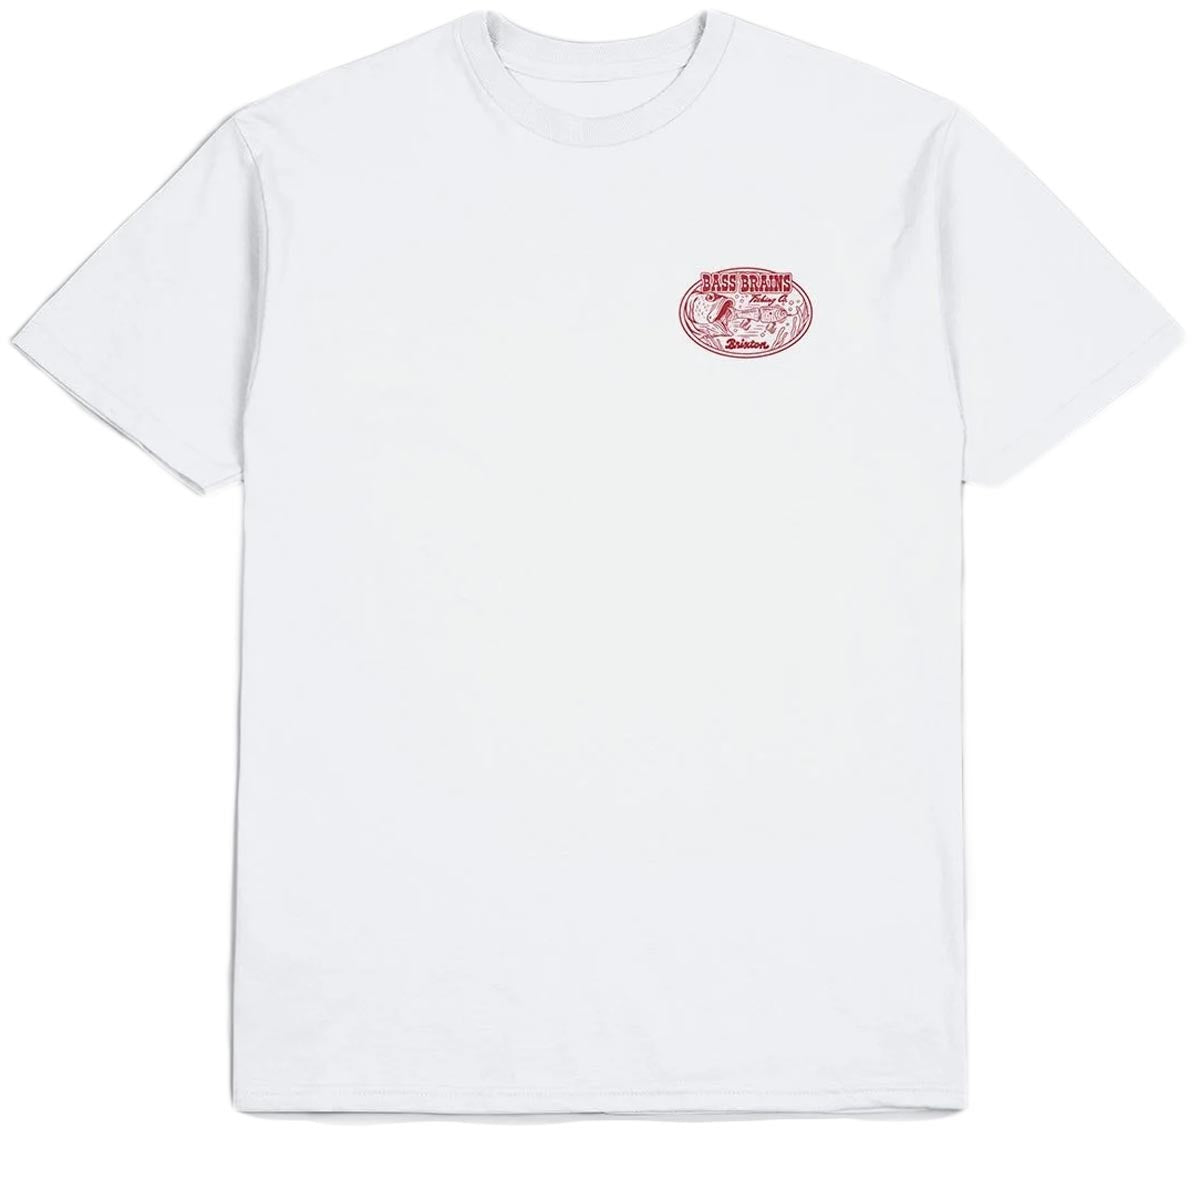 Brixton Bass Brains Swim T-Shirt - White image 2